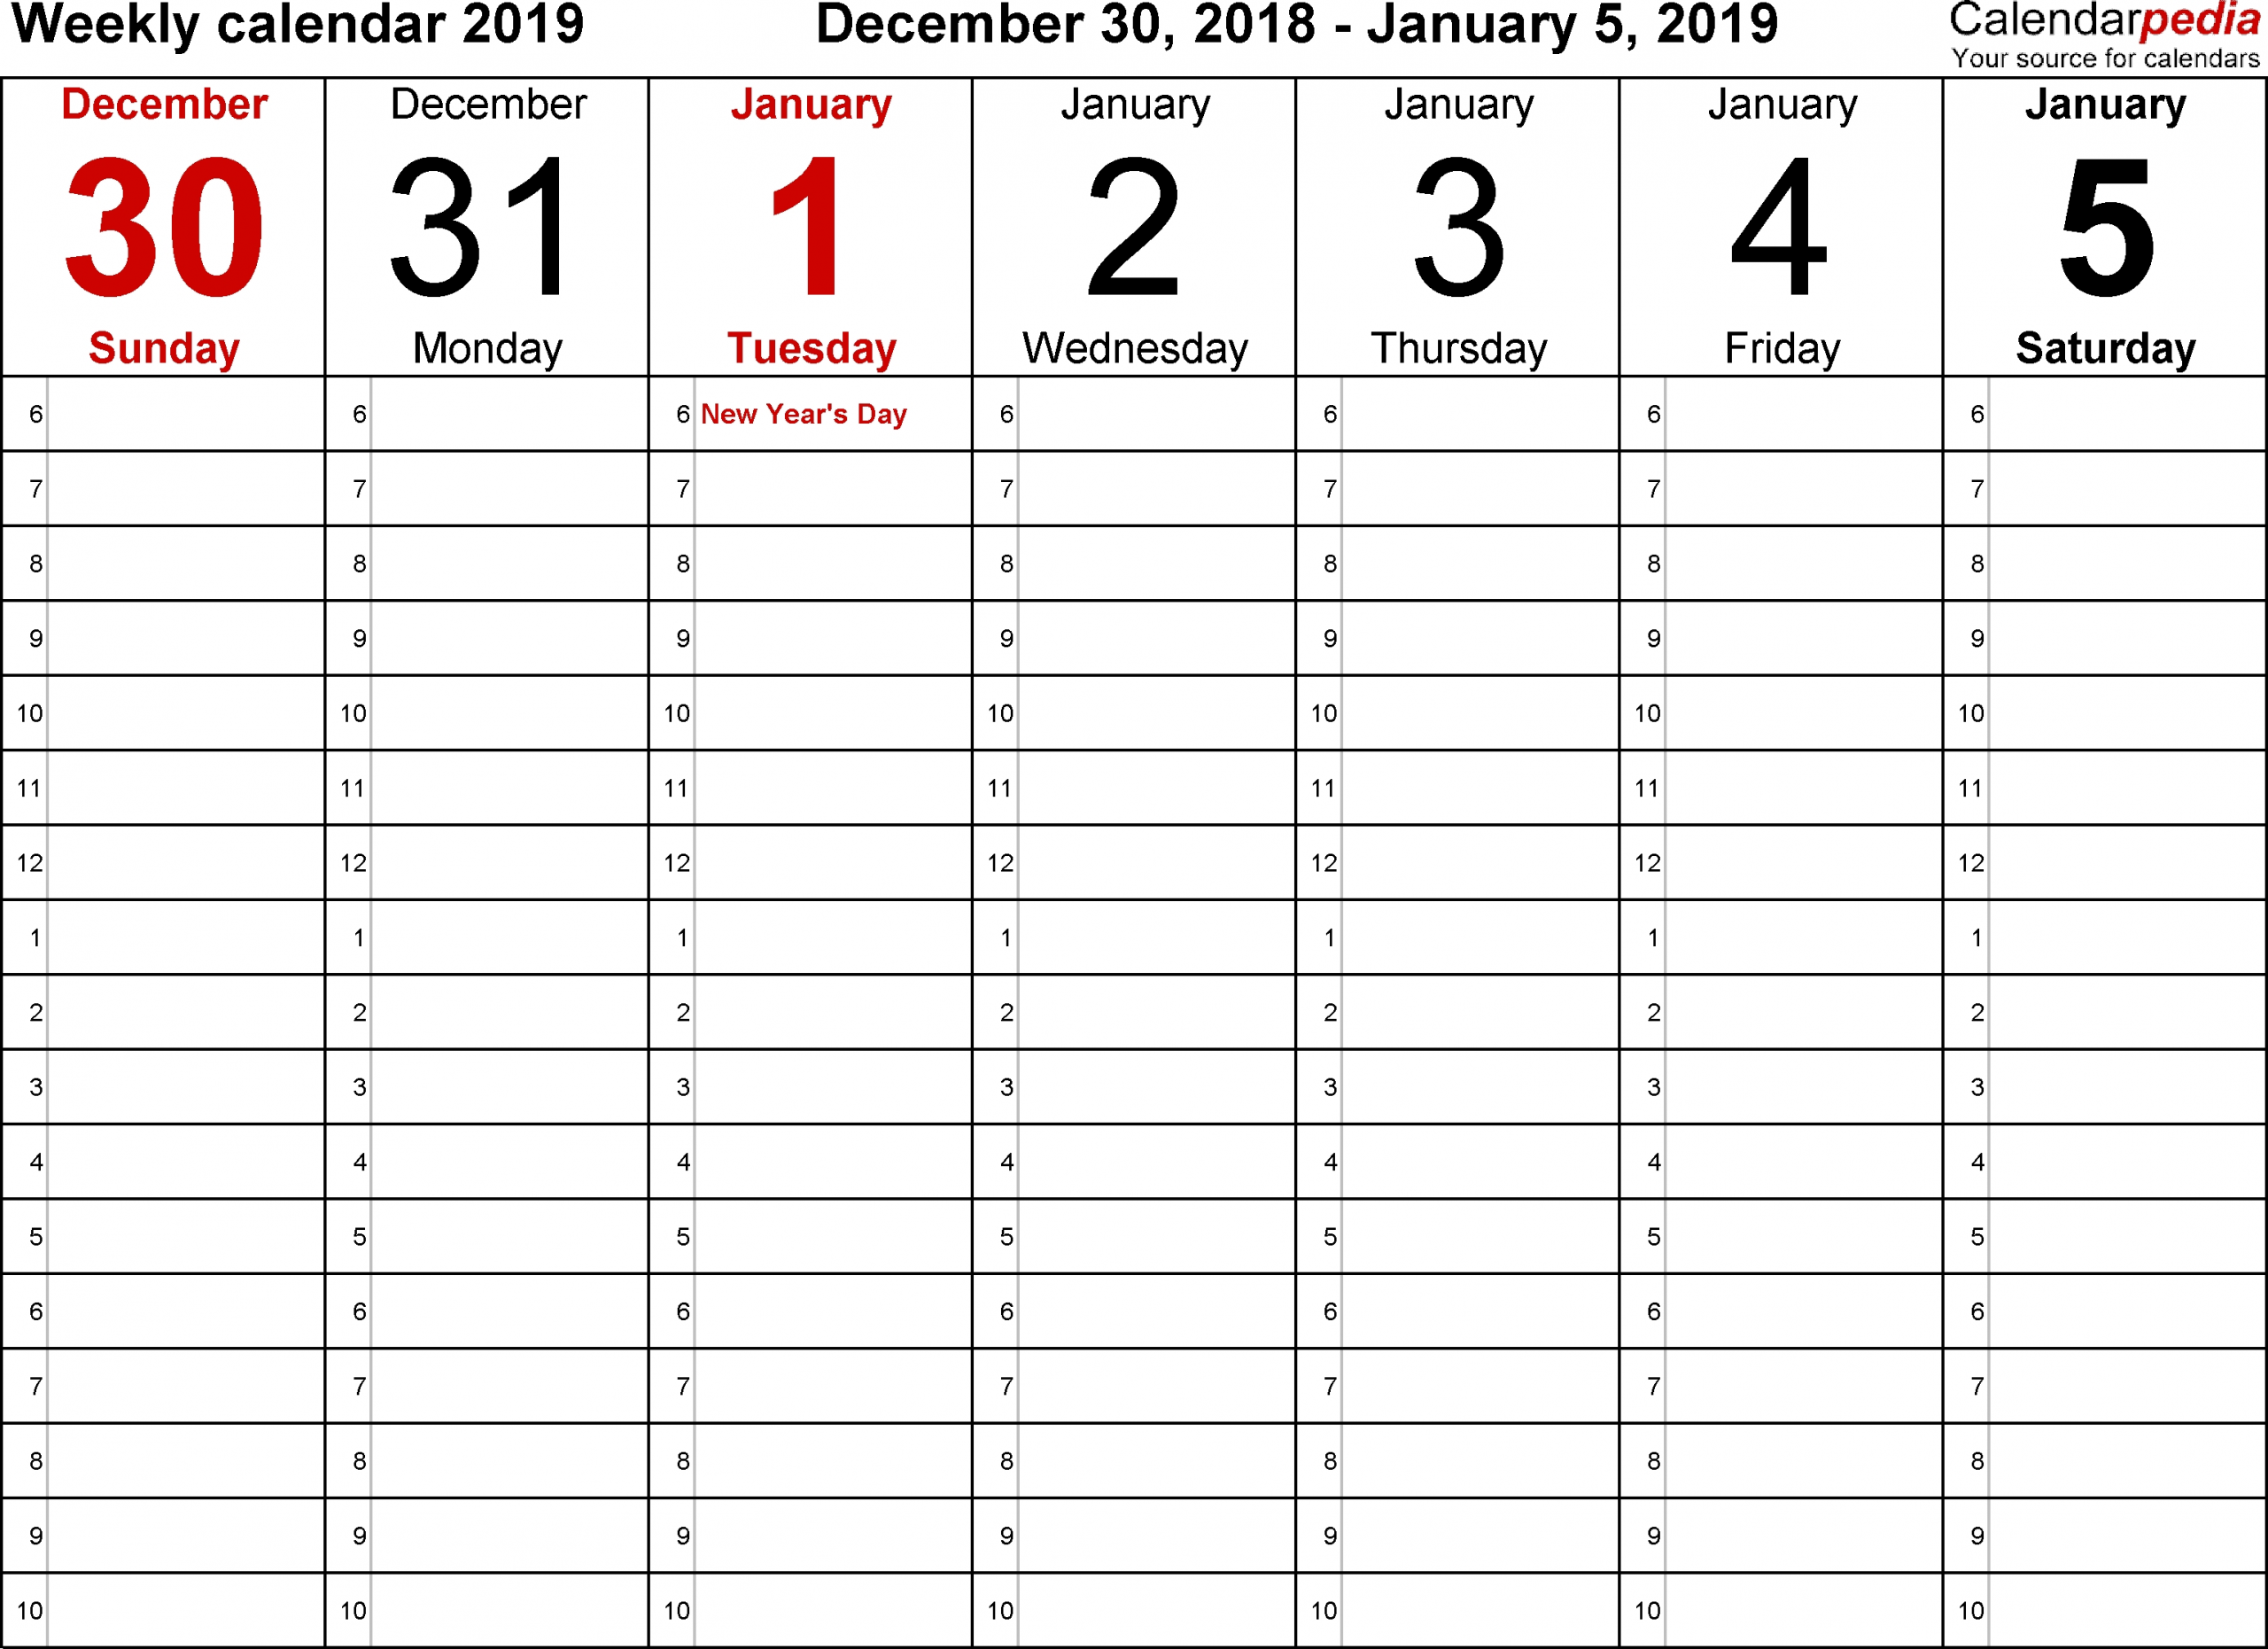 Weekly Calendar 2019 For Word - 12 Free Printable Templates inside Week Printable Calendar With Lines